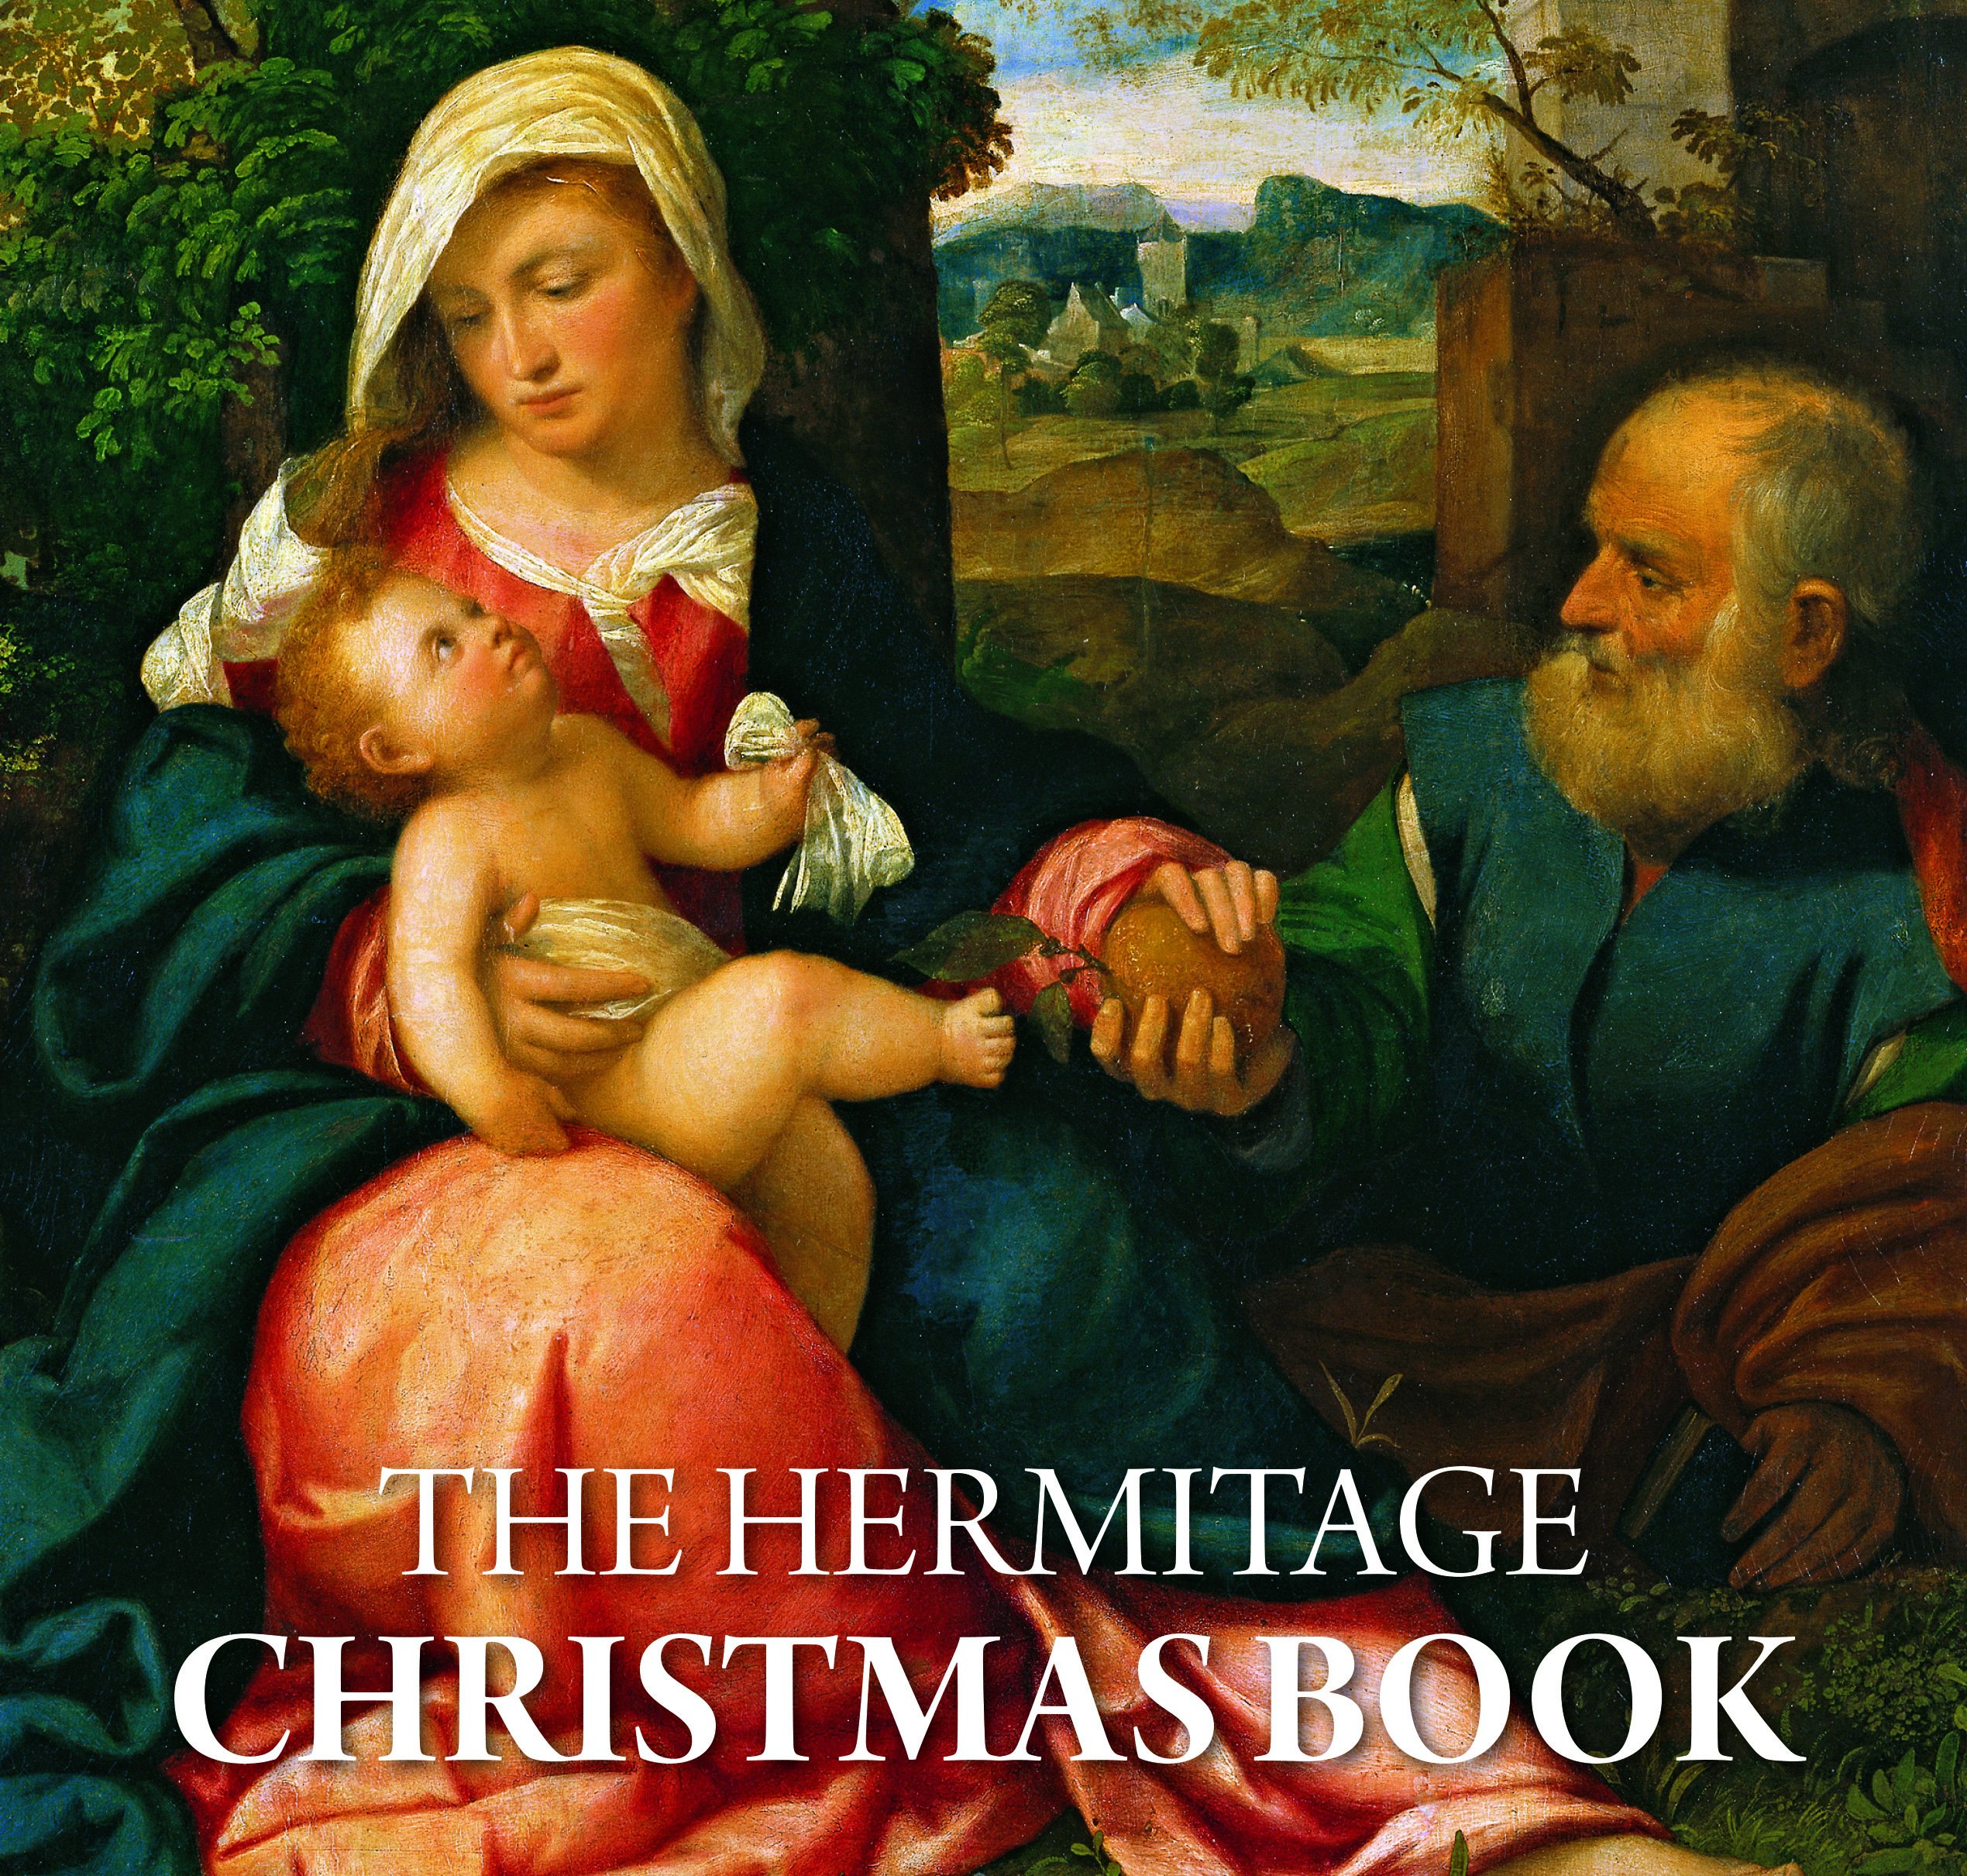 Hermitage Christmas book